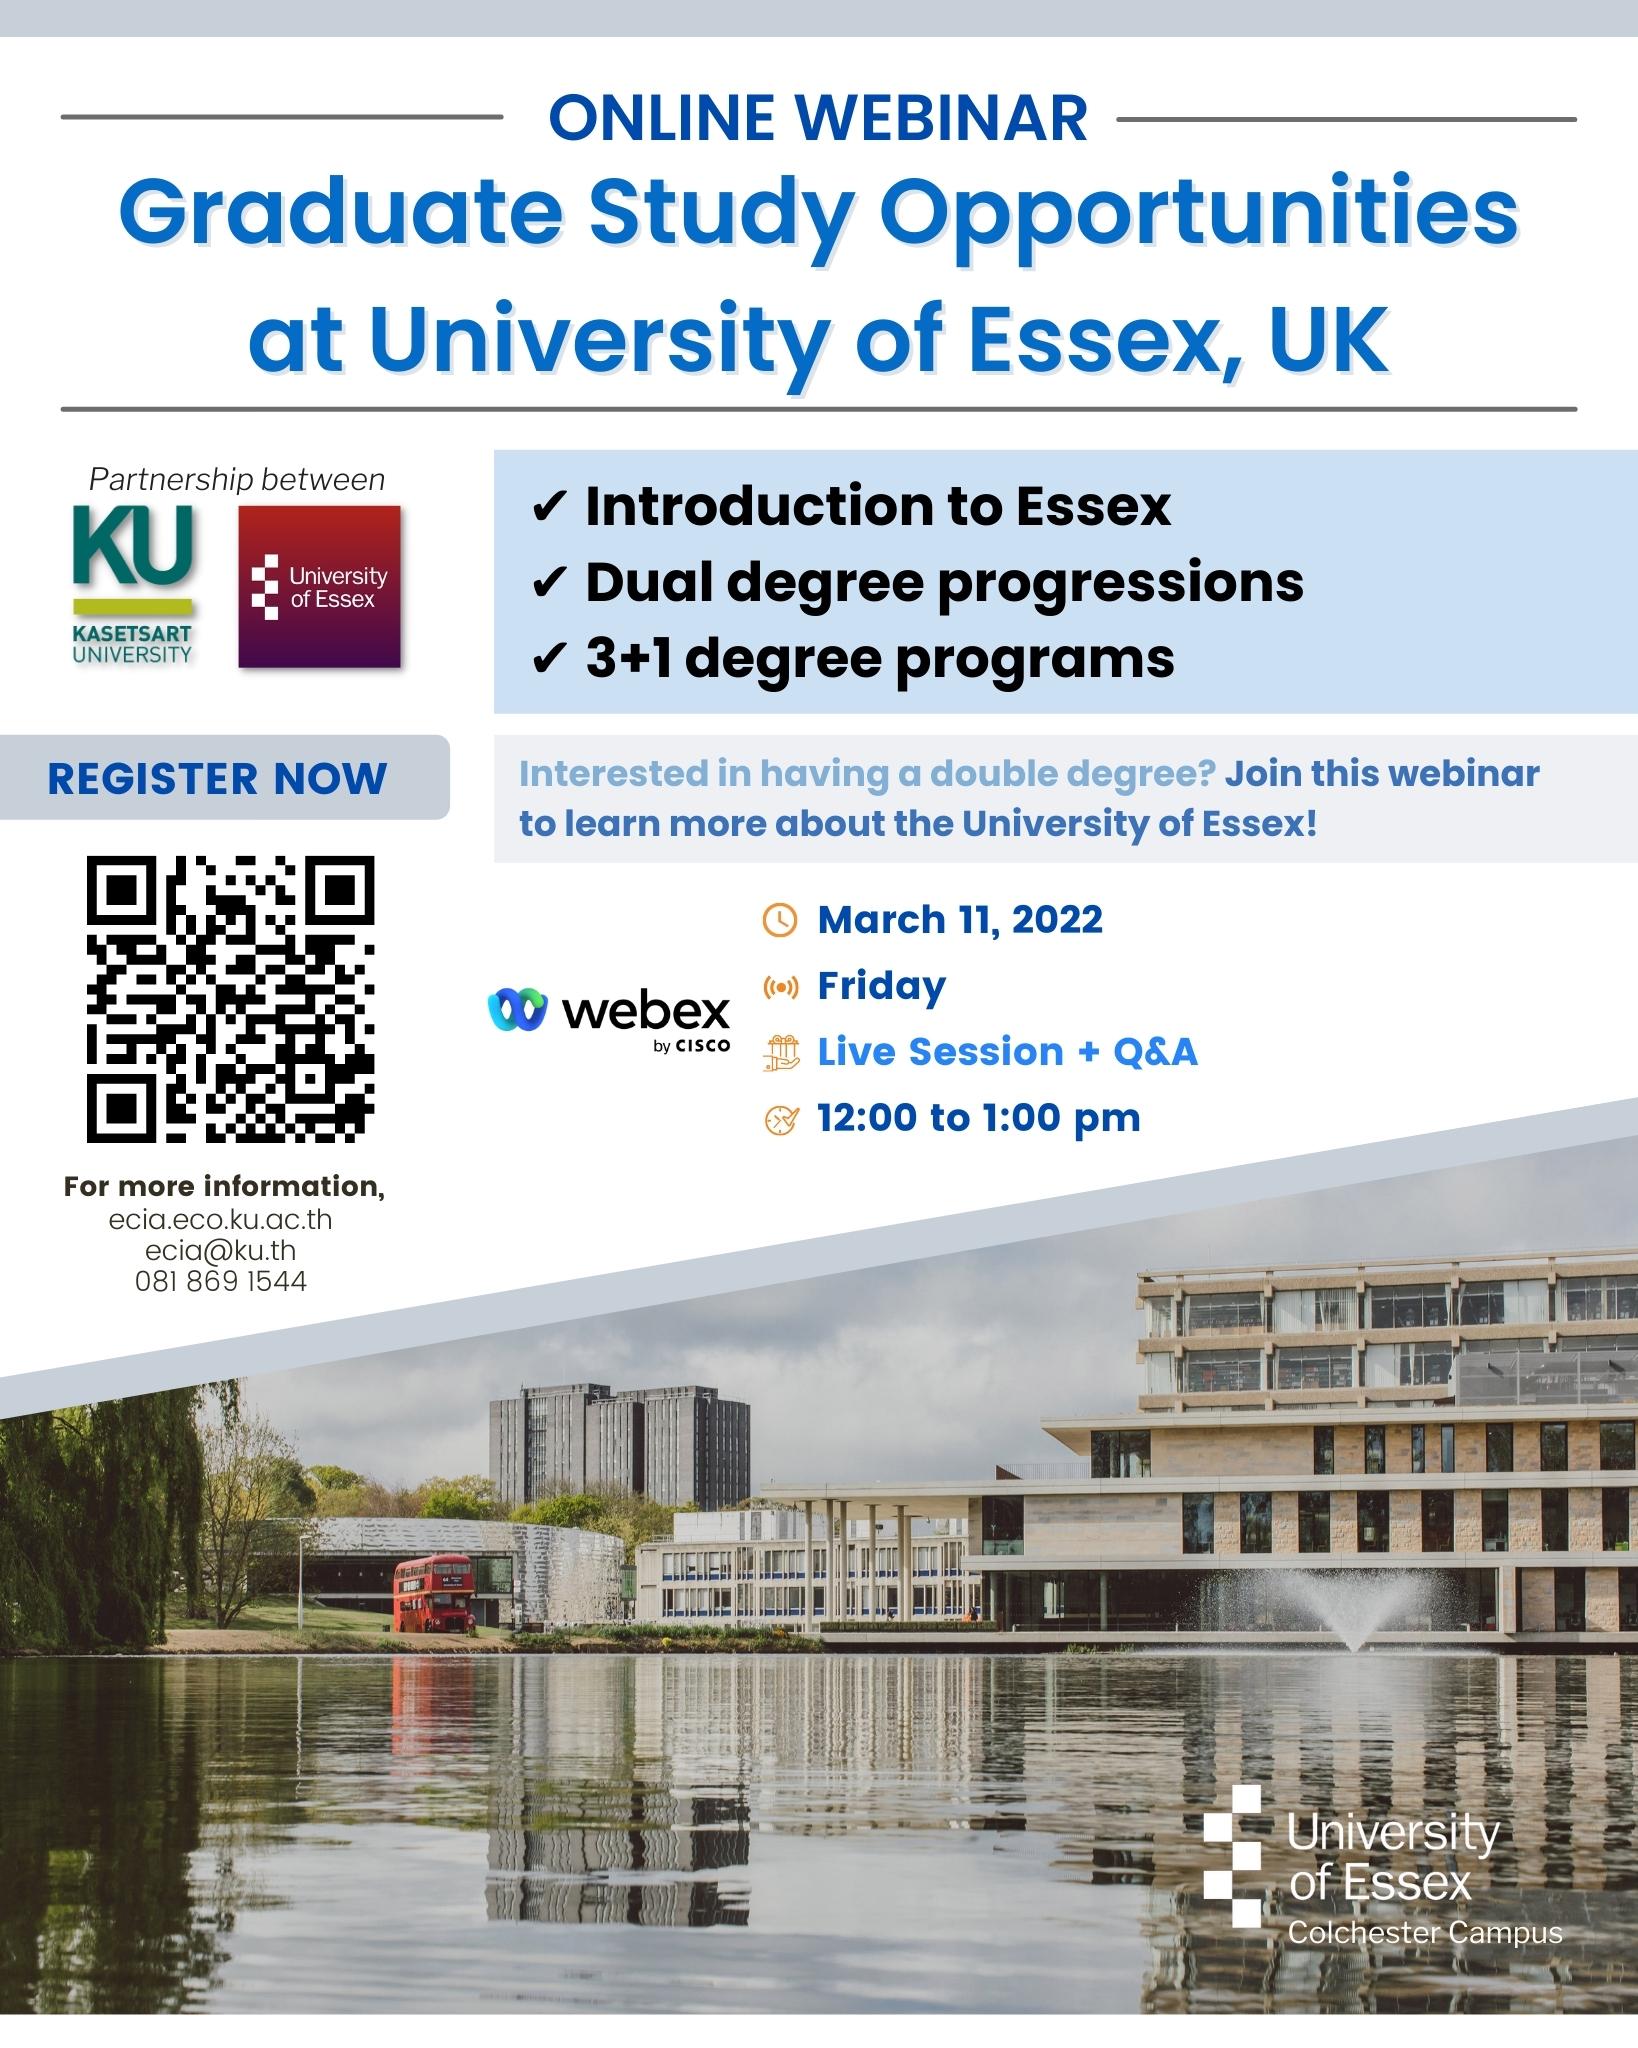 Online Webinar: Graduate Study Opportunities at University of Essex, UK – March 11, 2022